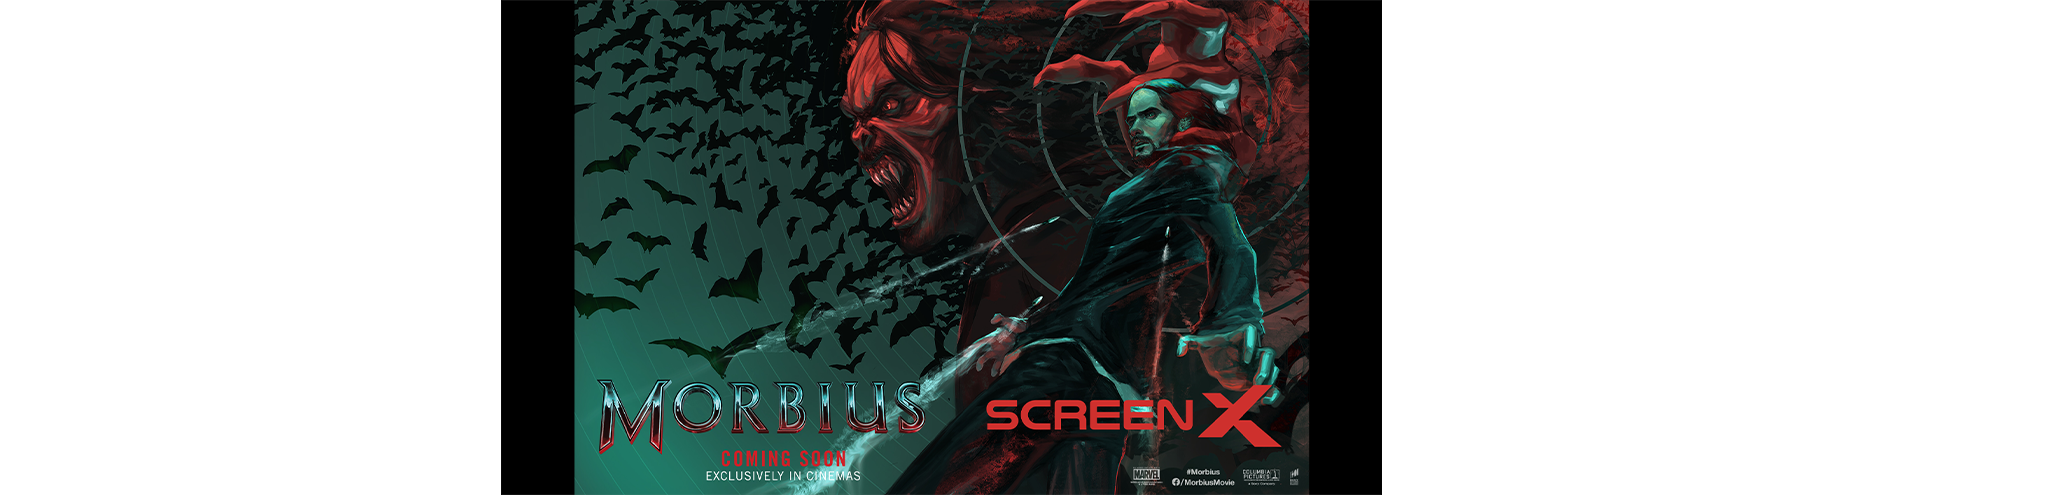 morbius screenx.png